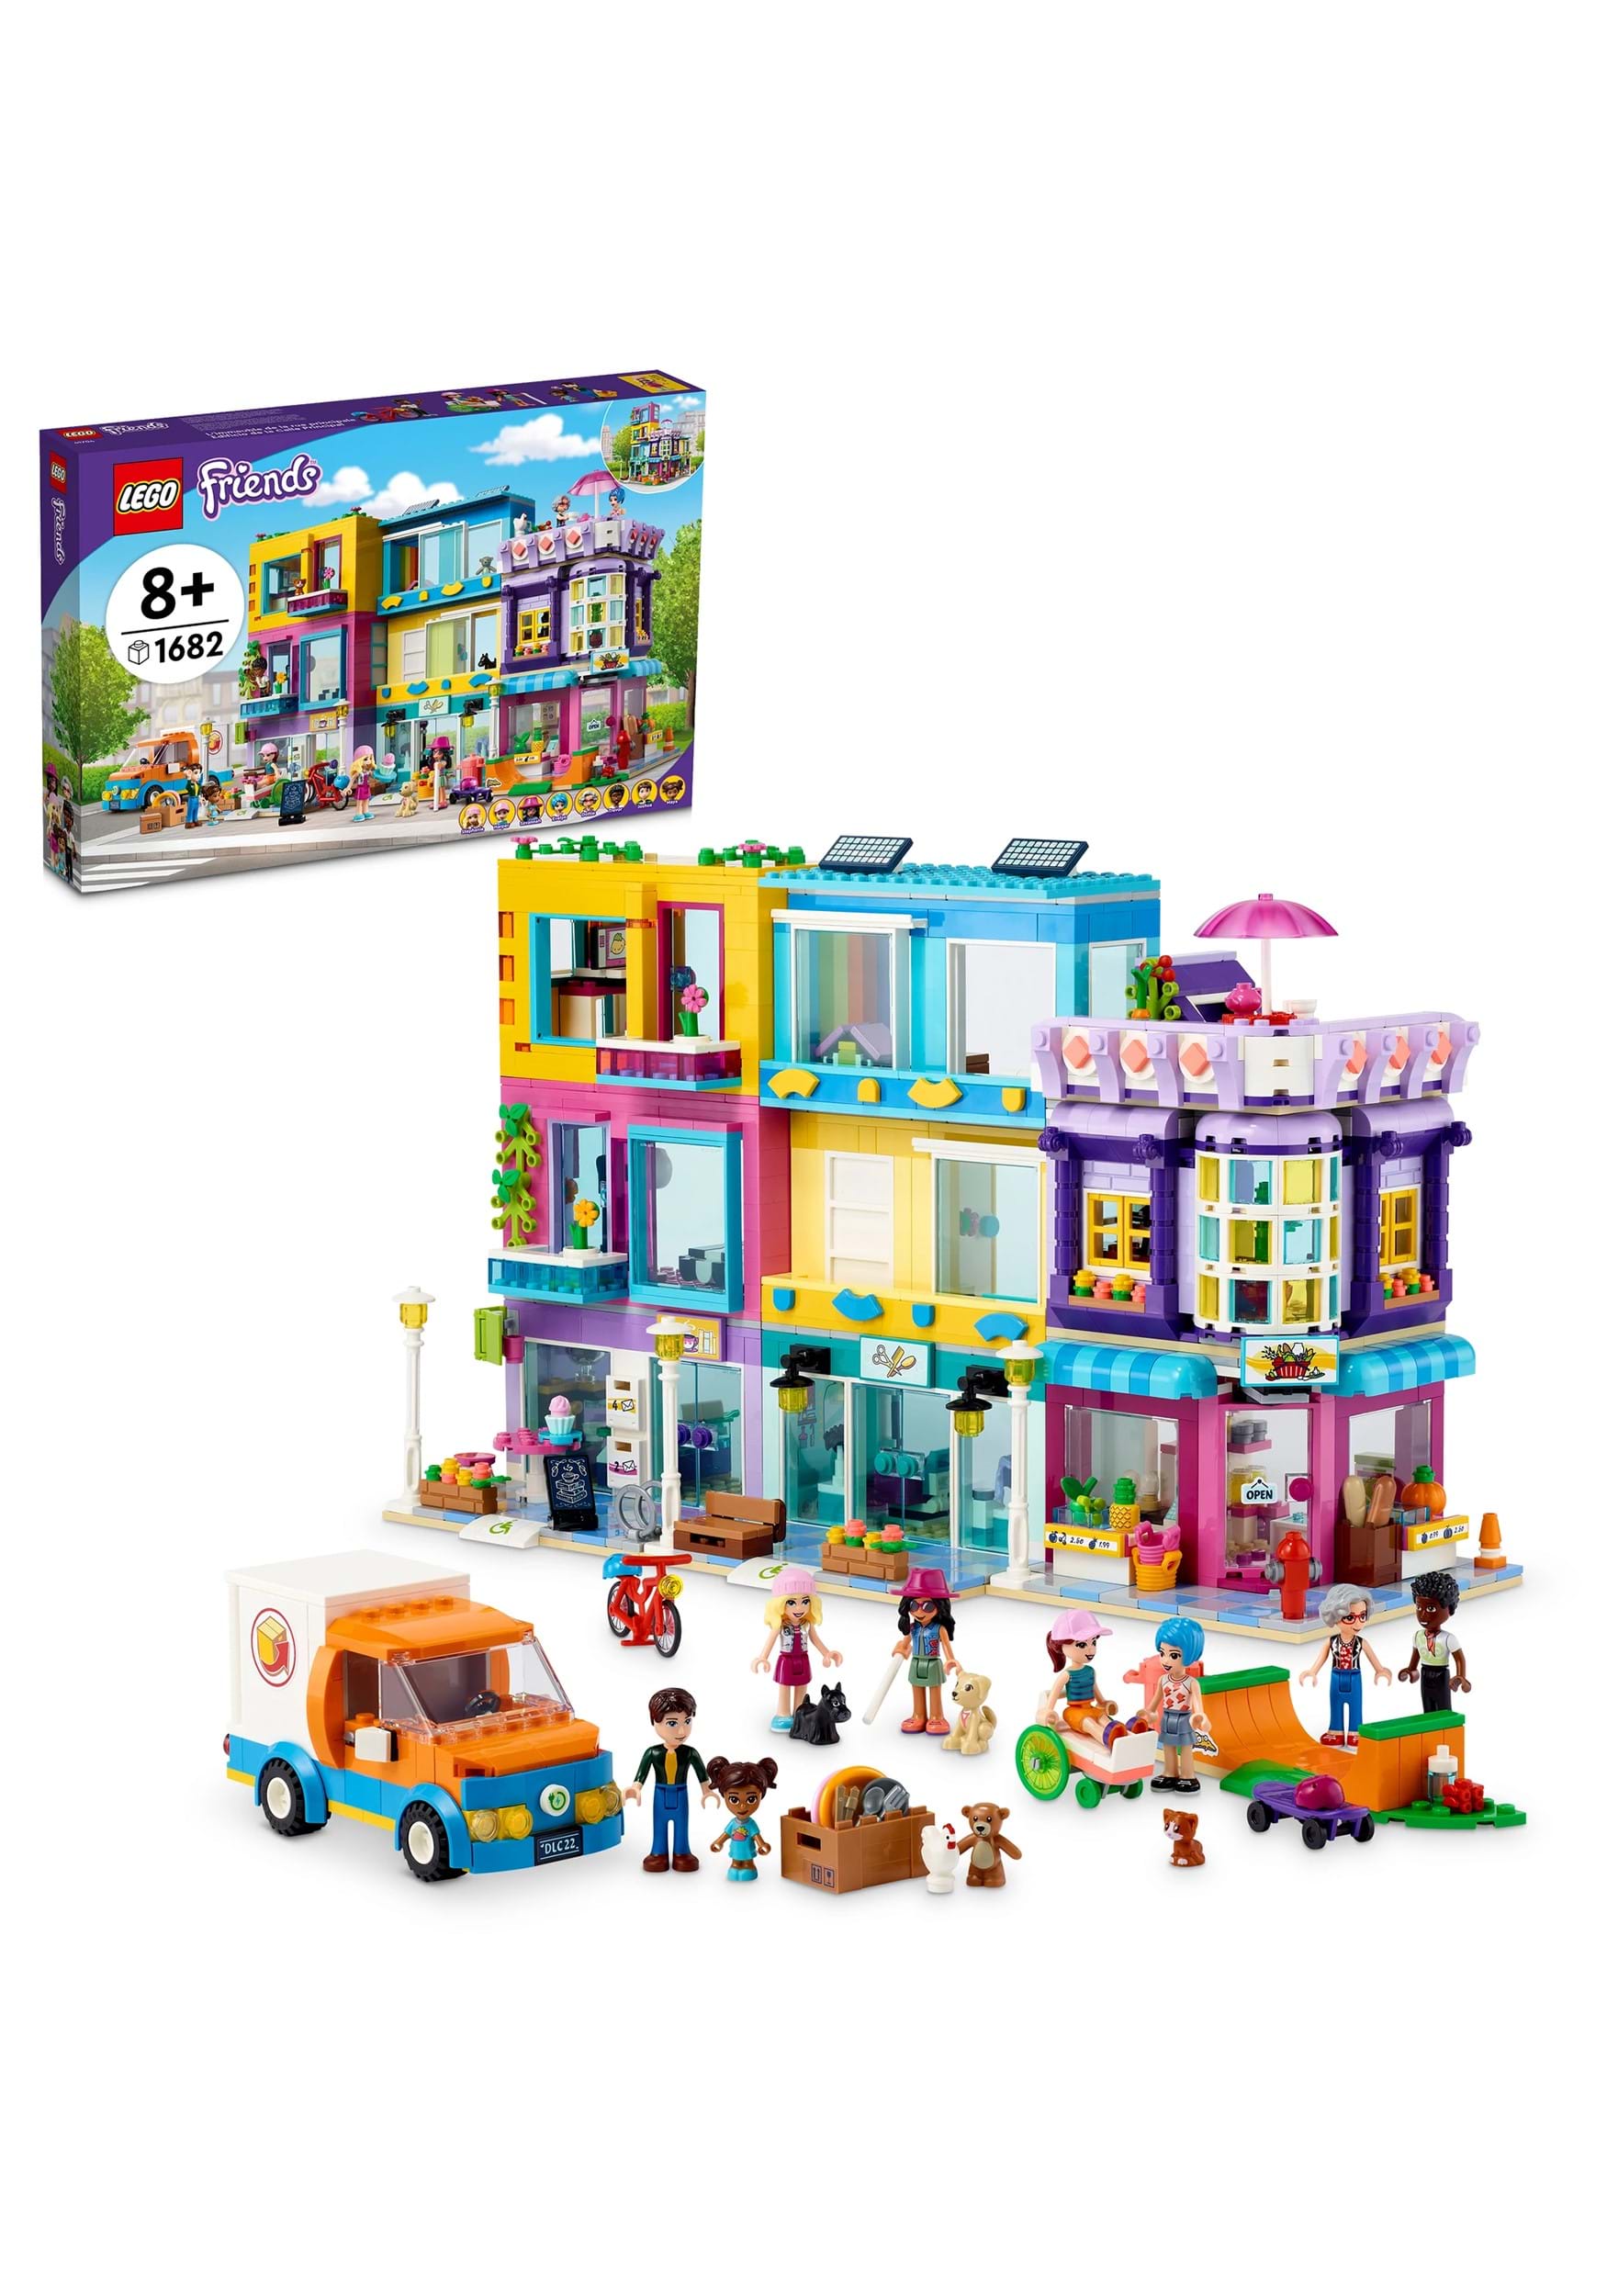 LEGO Friends: Main Street Building Set